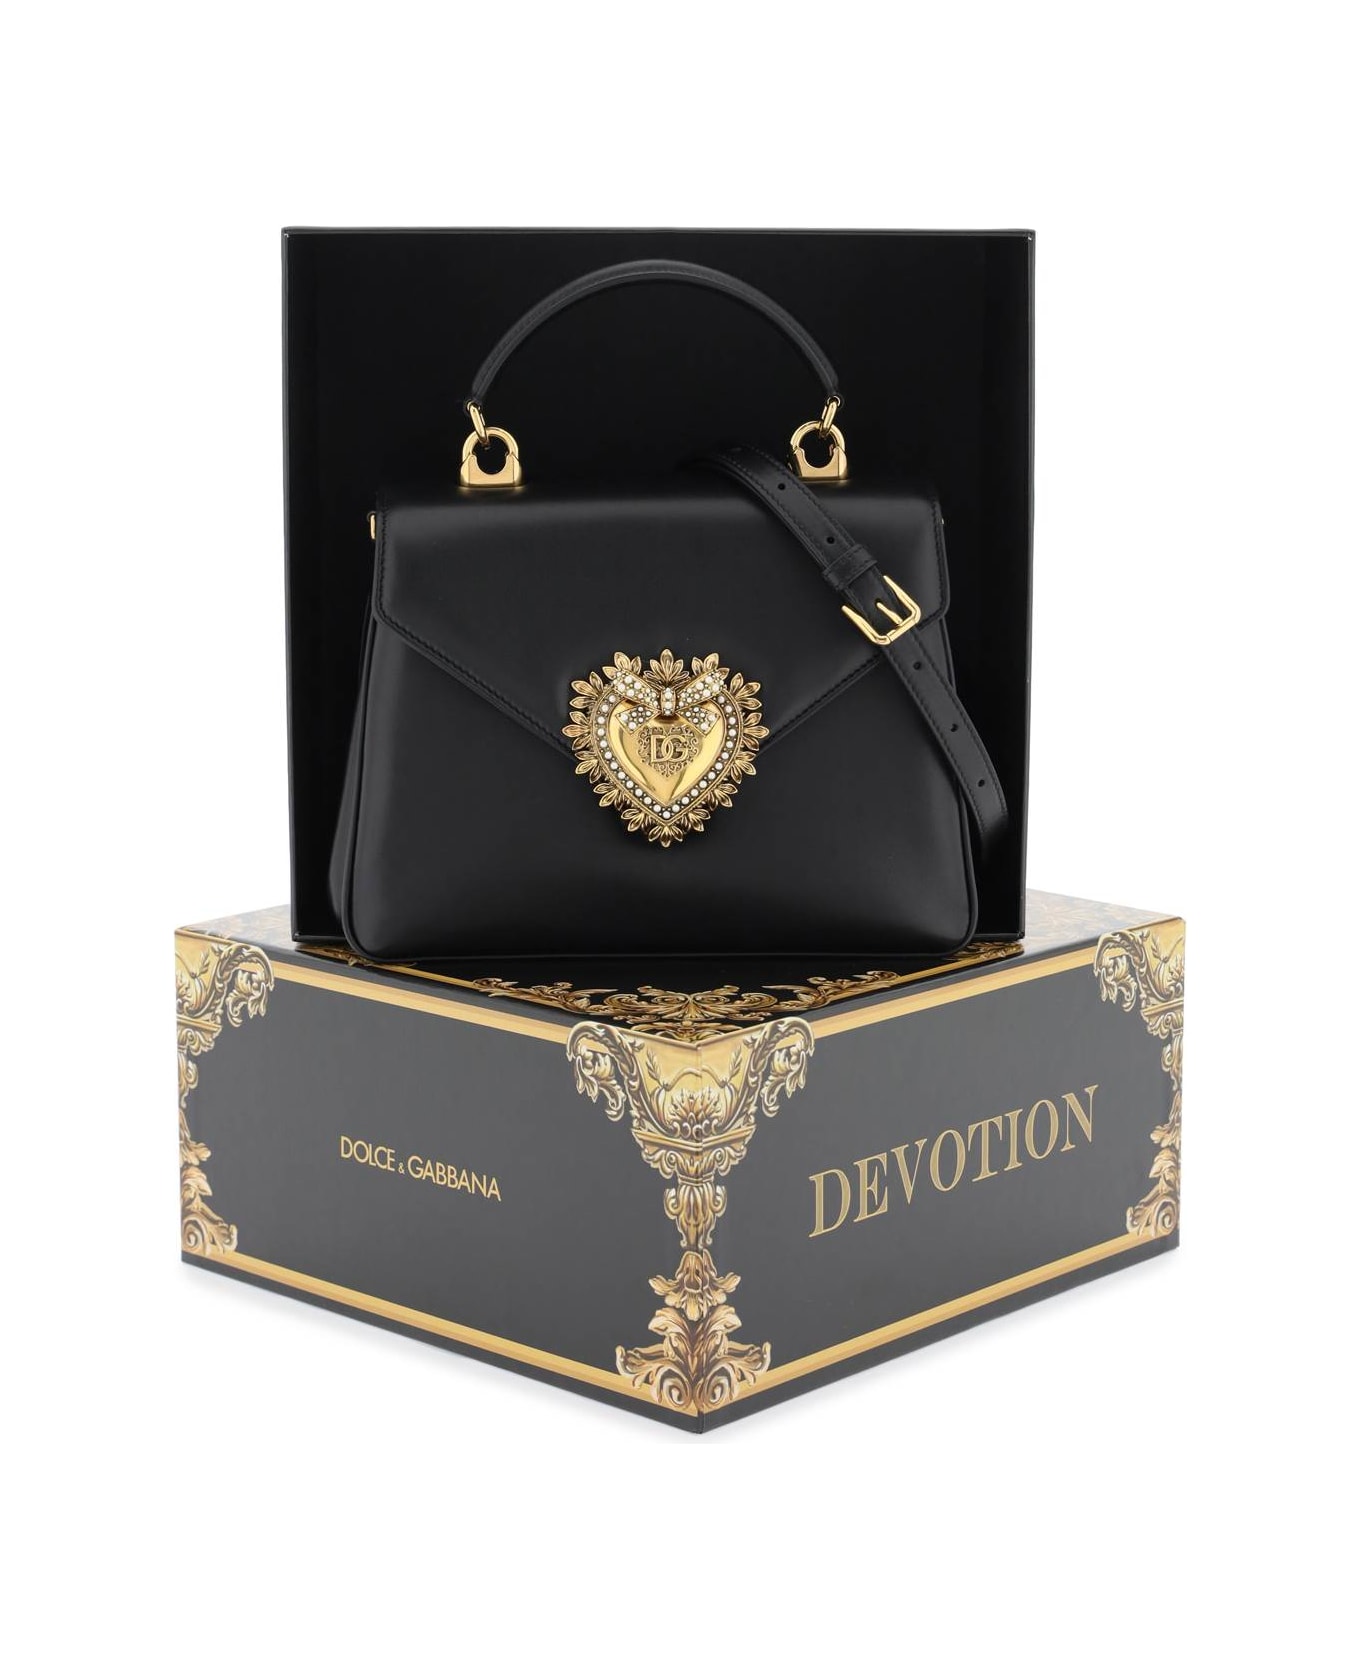 Dolce & Gabbana Devotion Handbag - NERO (Black) トートバッグ